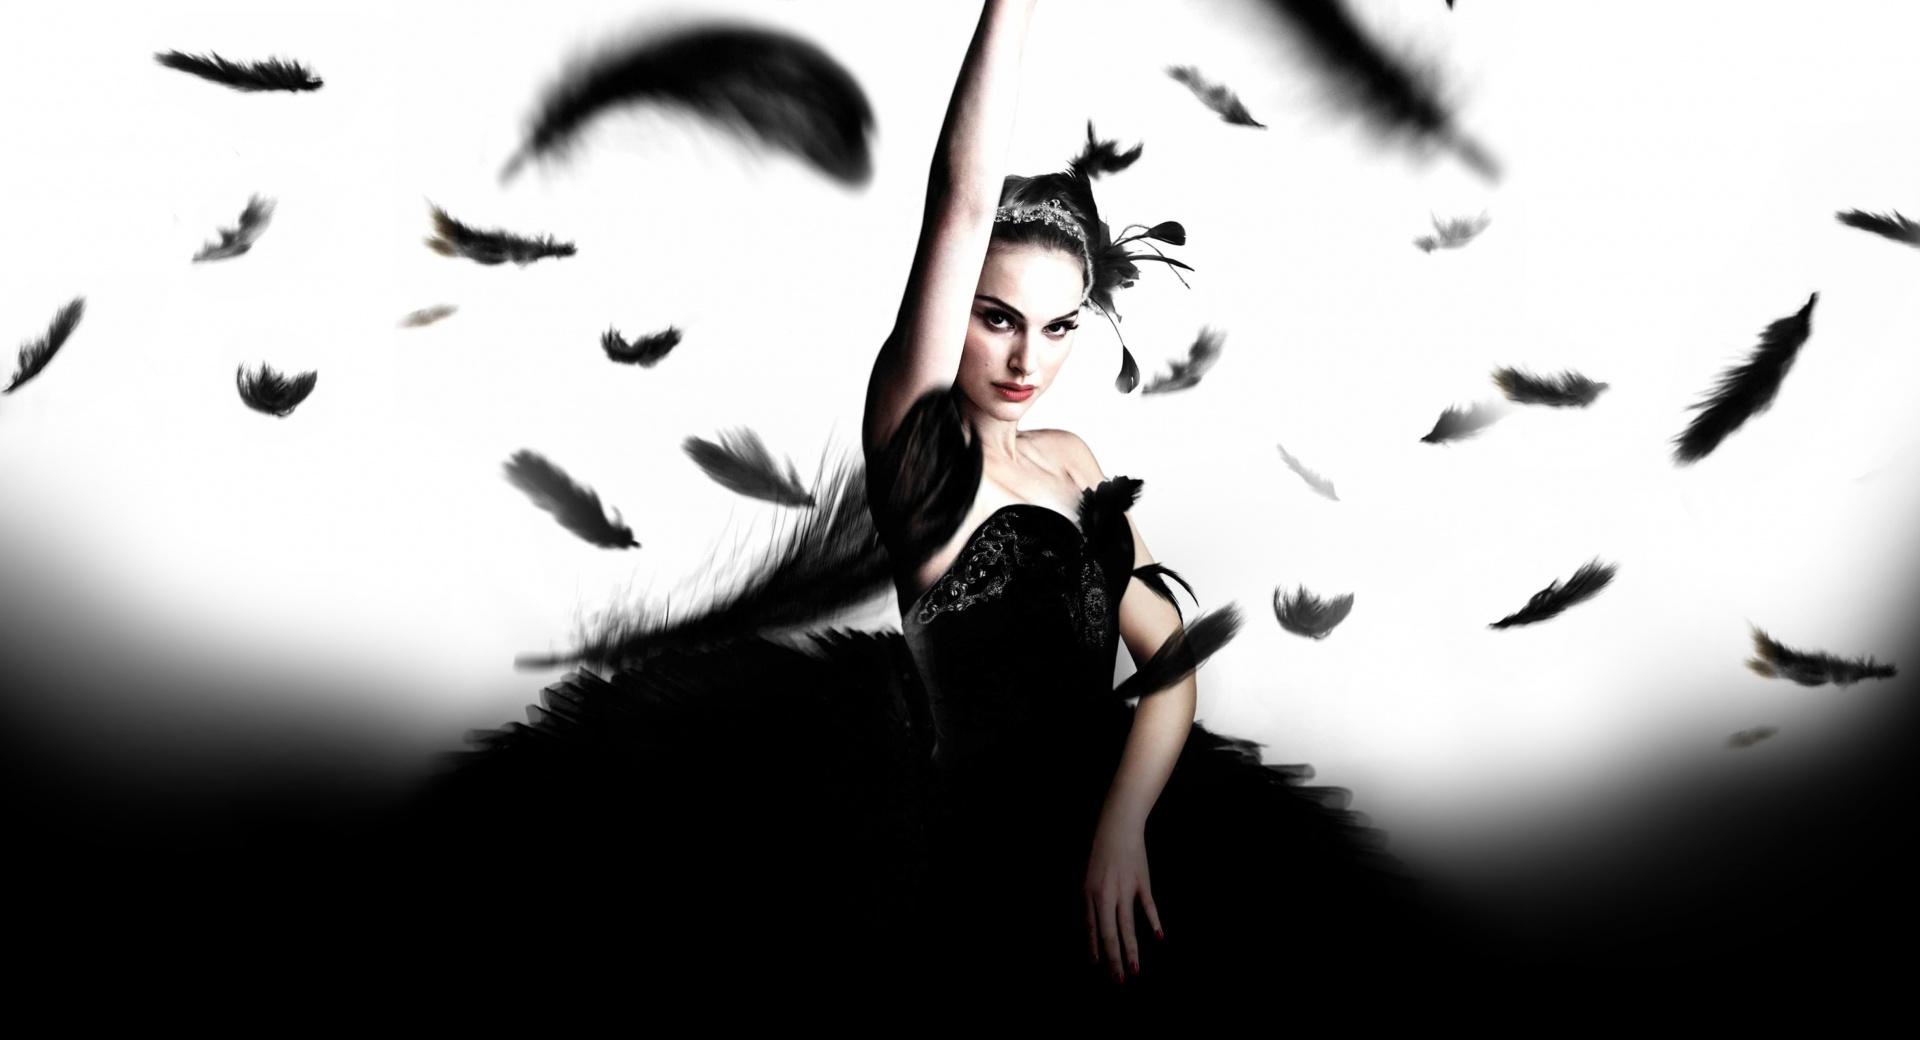 Black Swan Natalie Portman at 1024 x 1024 iPad size wallpapers HD quality